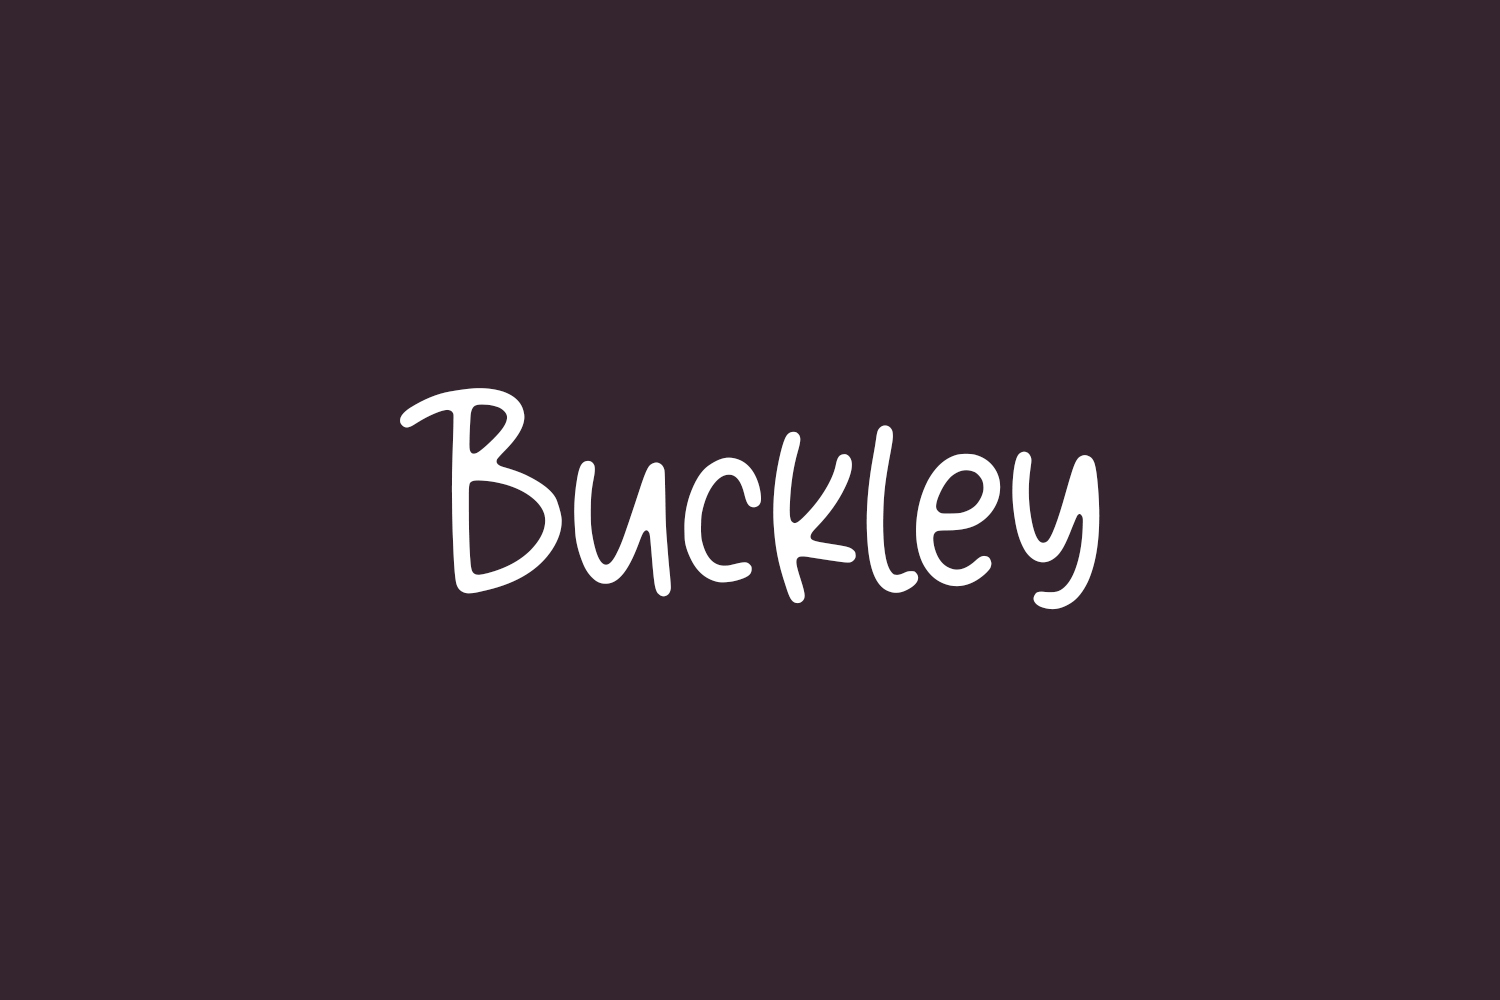 Buckley Free Font